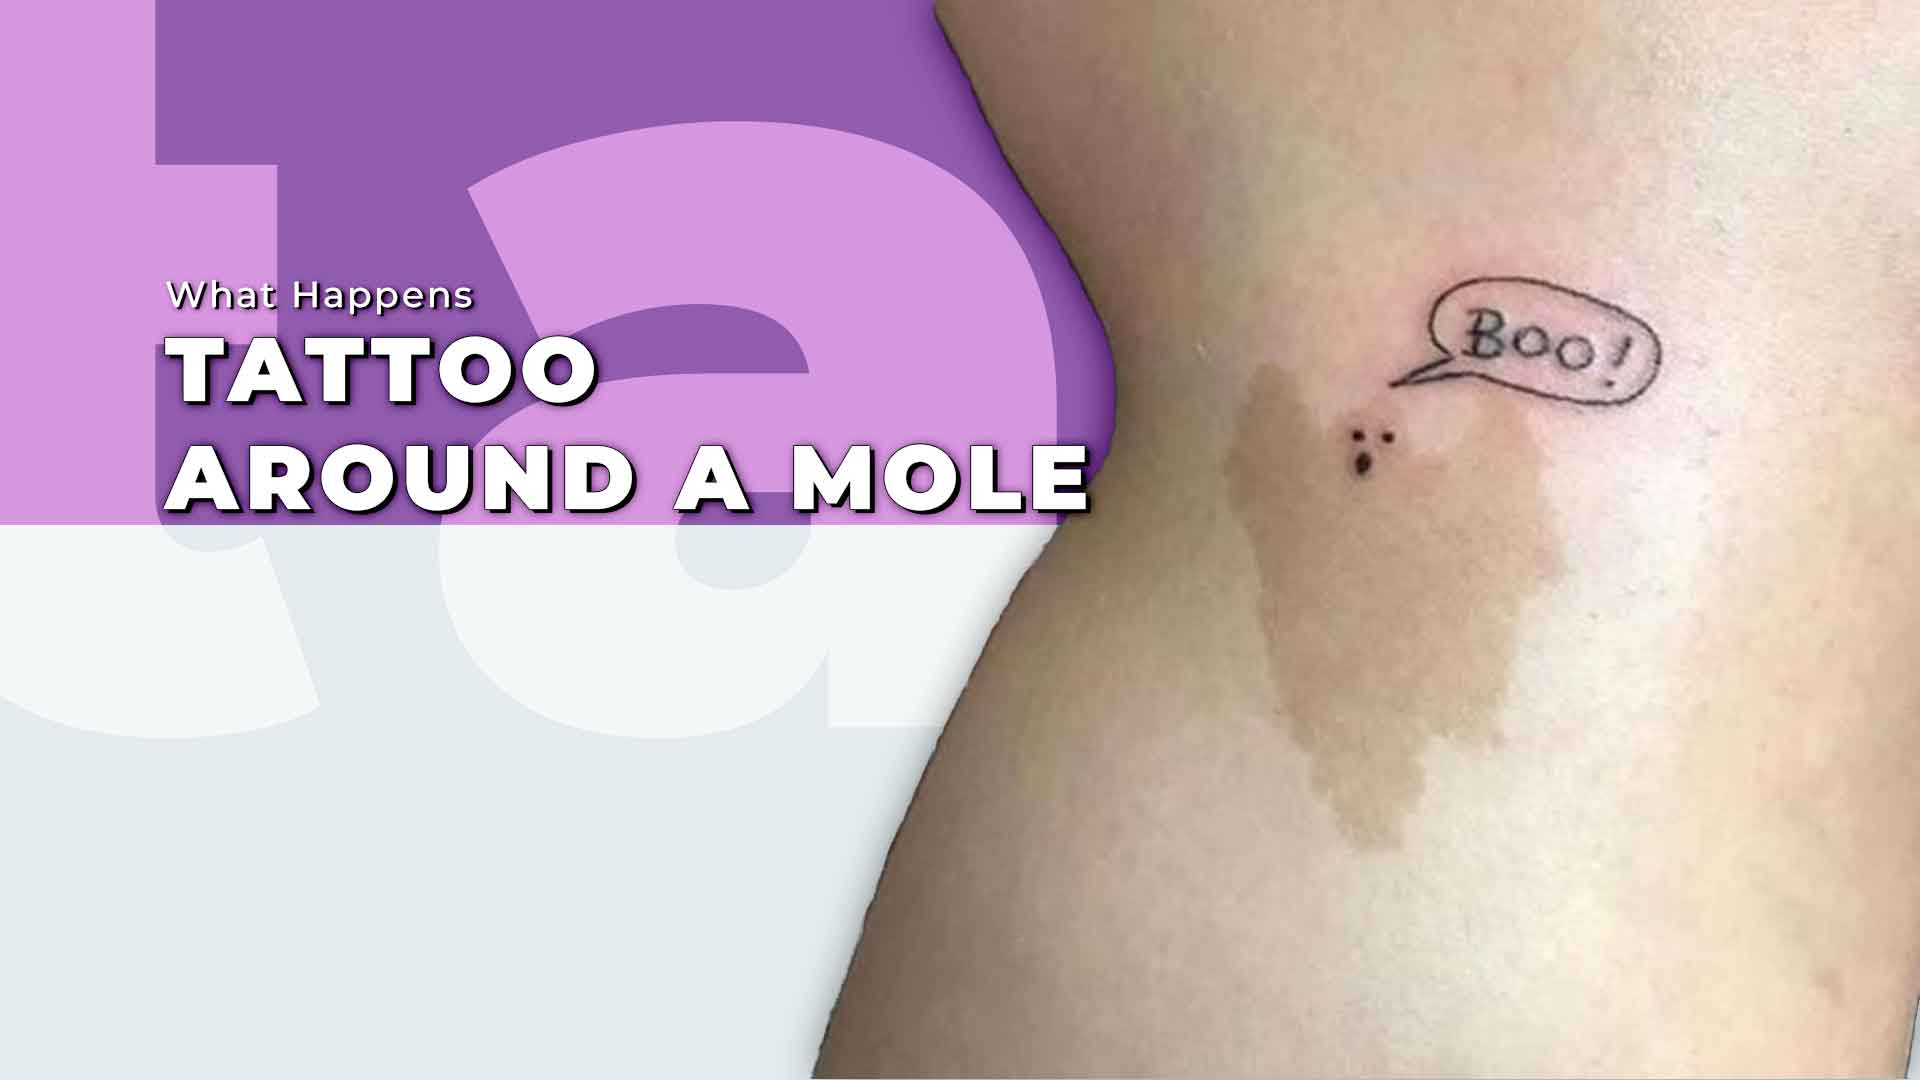 Pin by Leslie Williams on Tattoo ideas | Mole tattoo, Tattoos, Real love